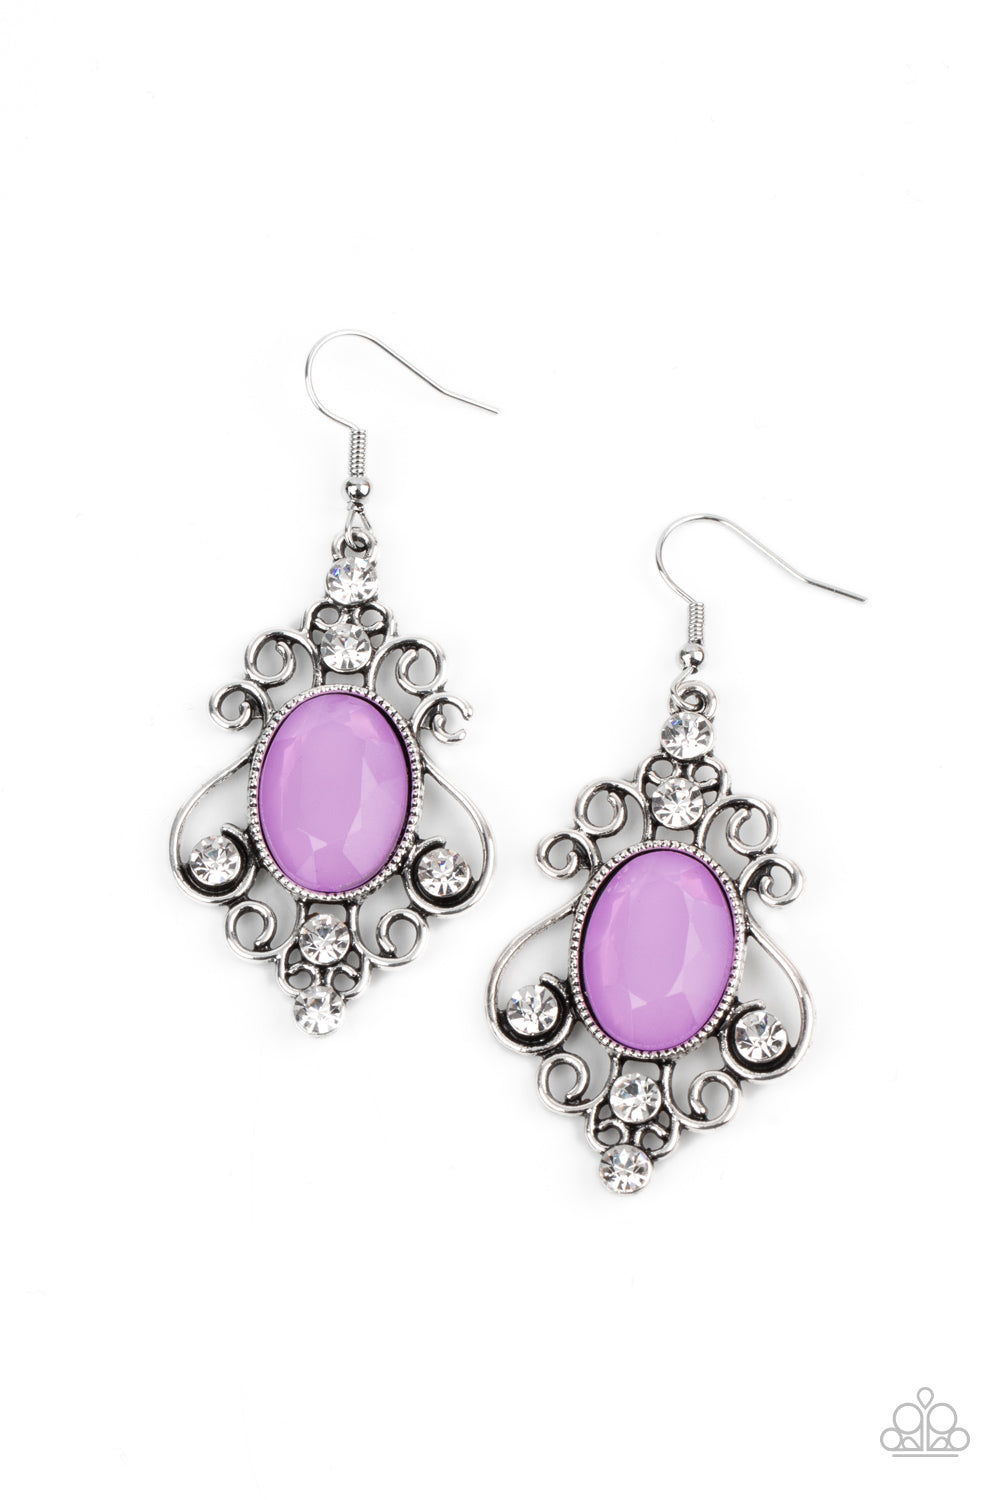 Tour de Fairytale - purple - Paparazzi earrings